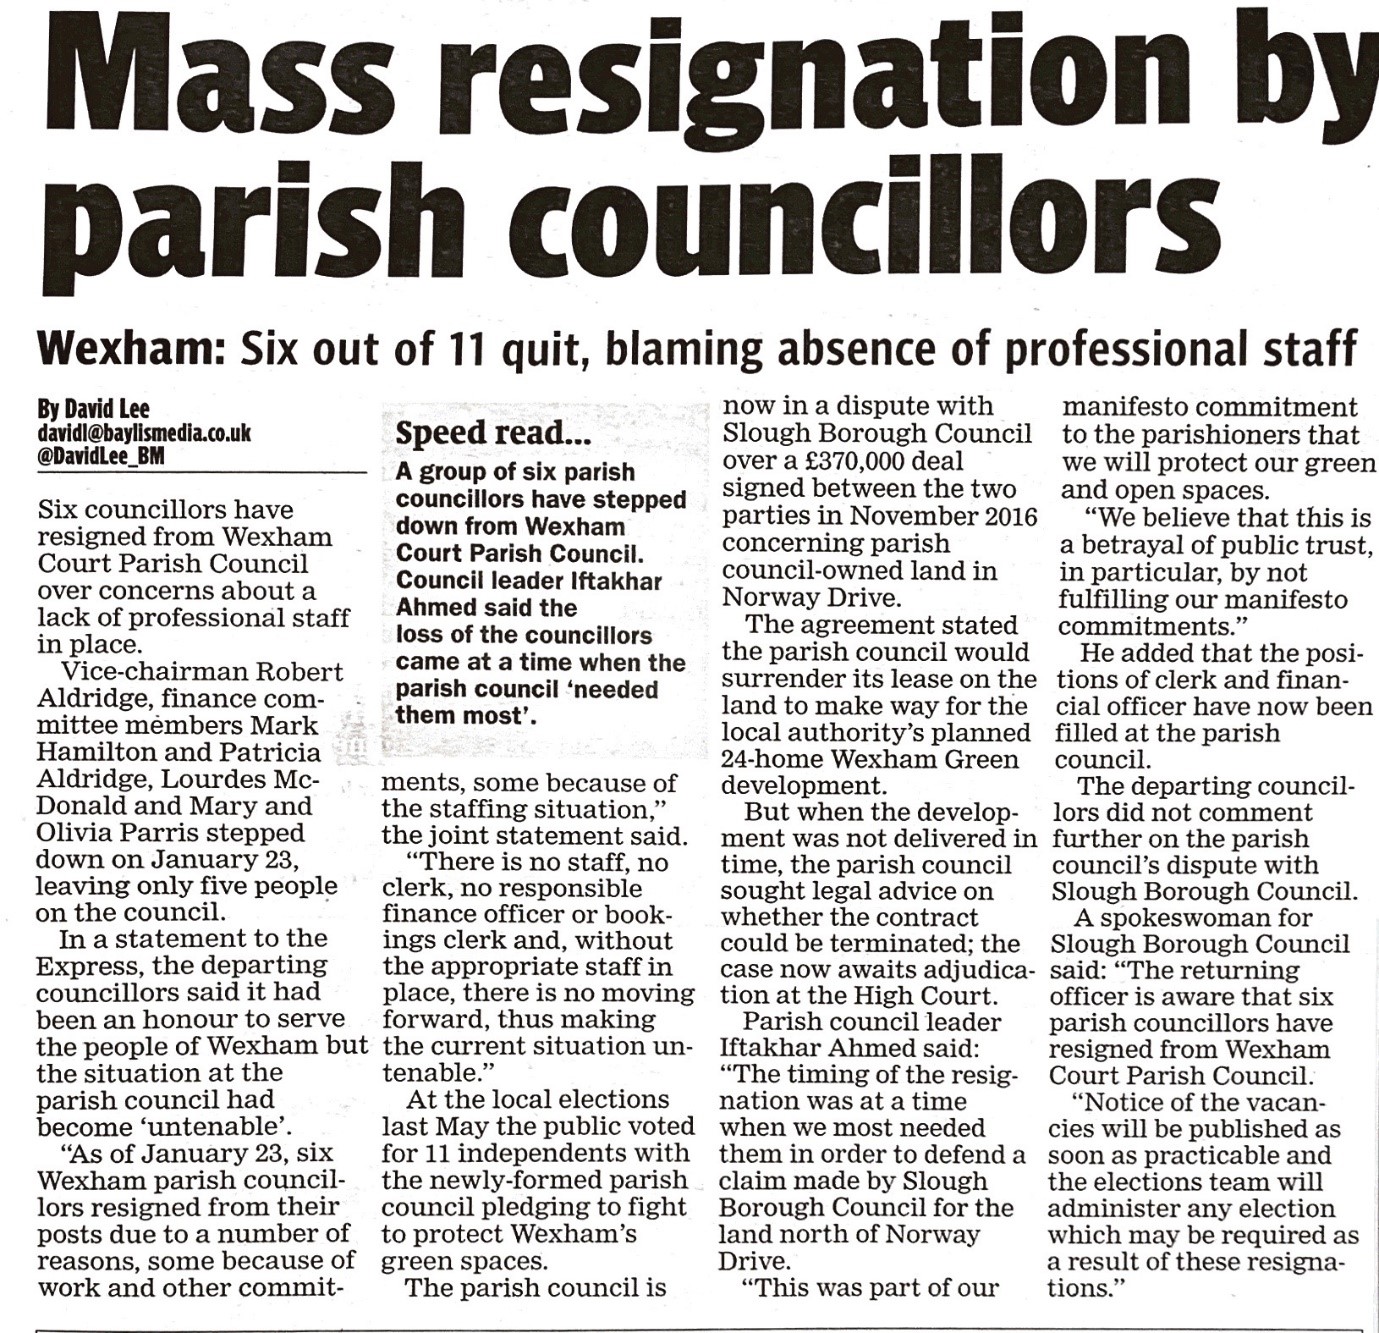 Resignation by parish councillors